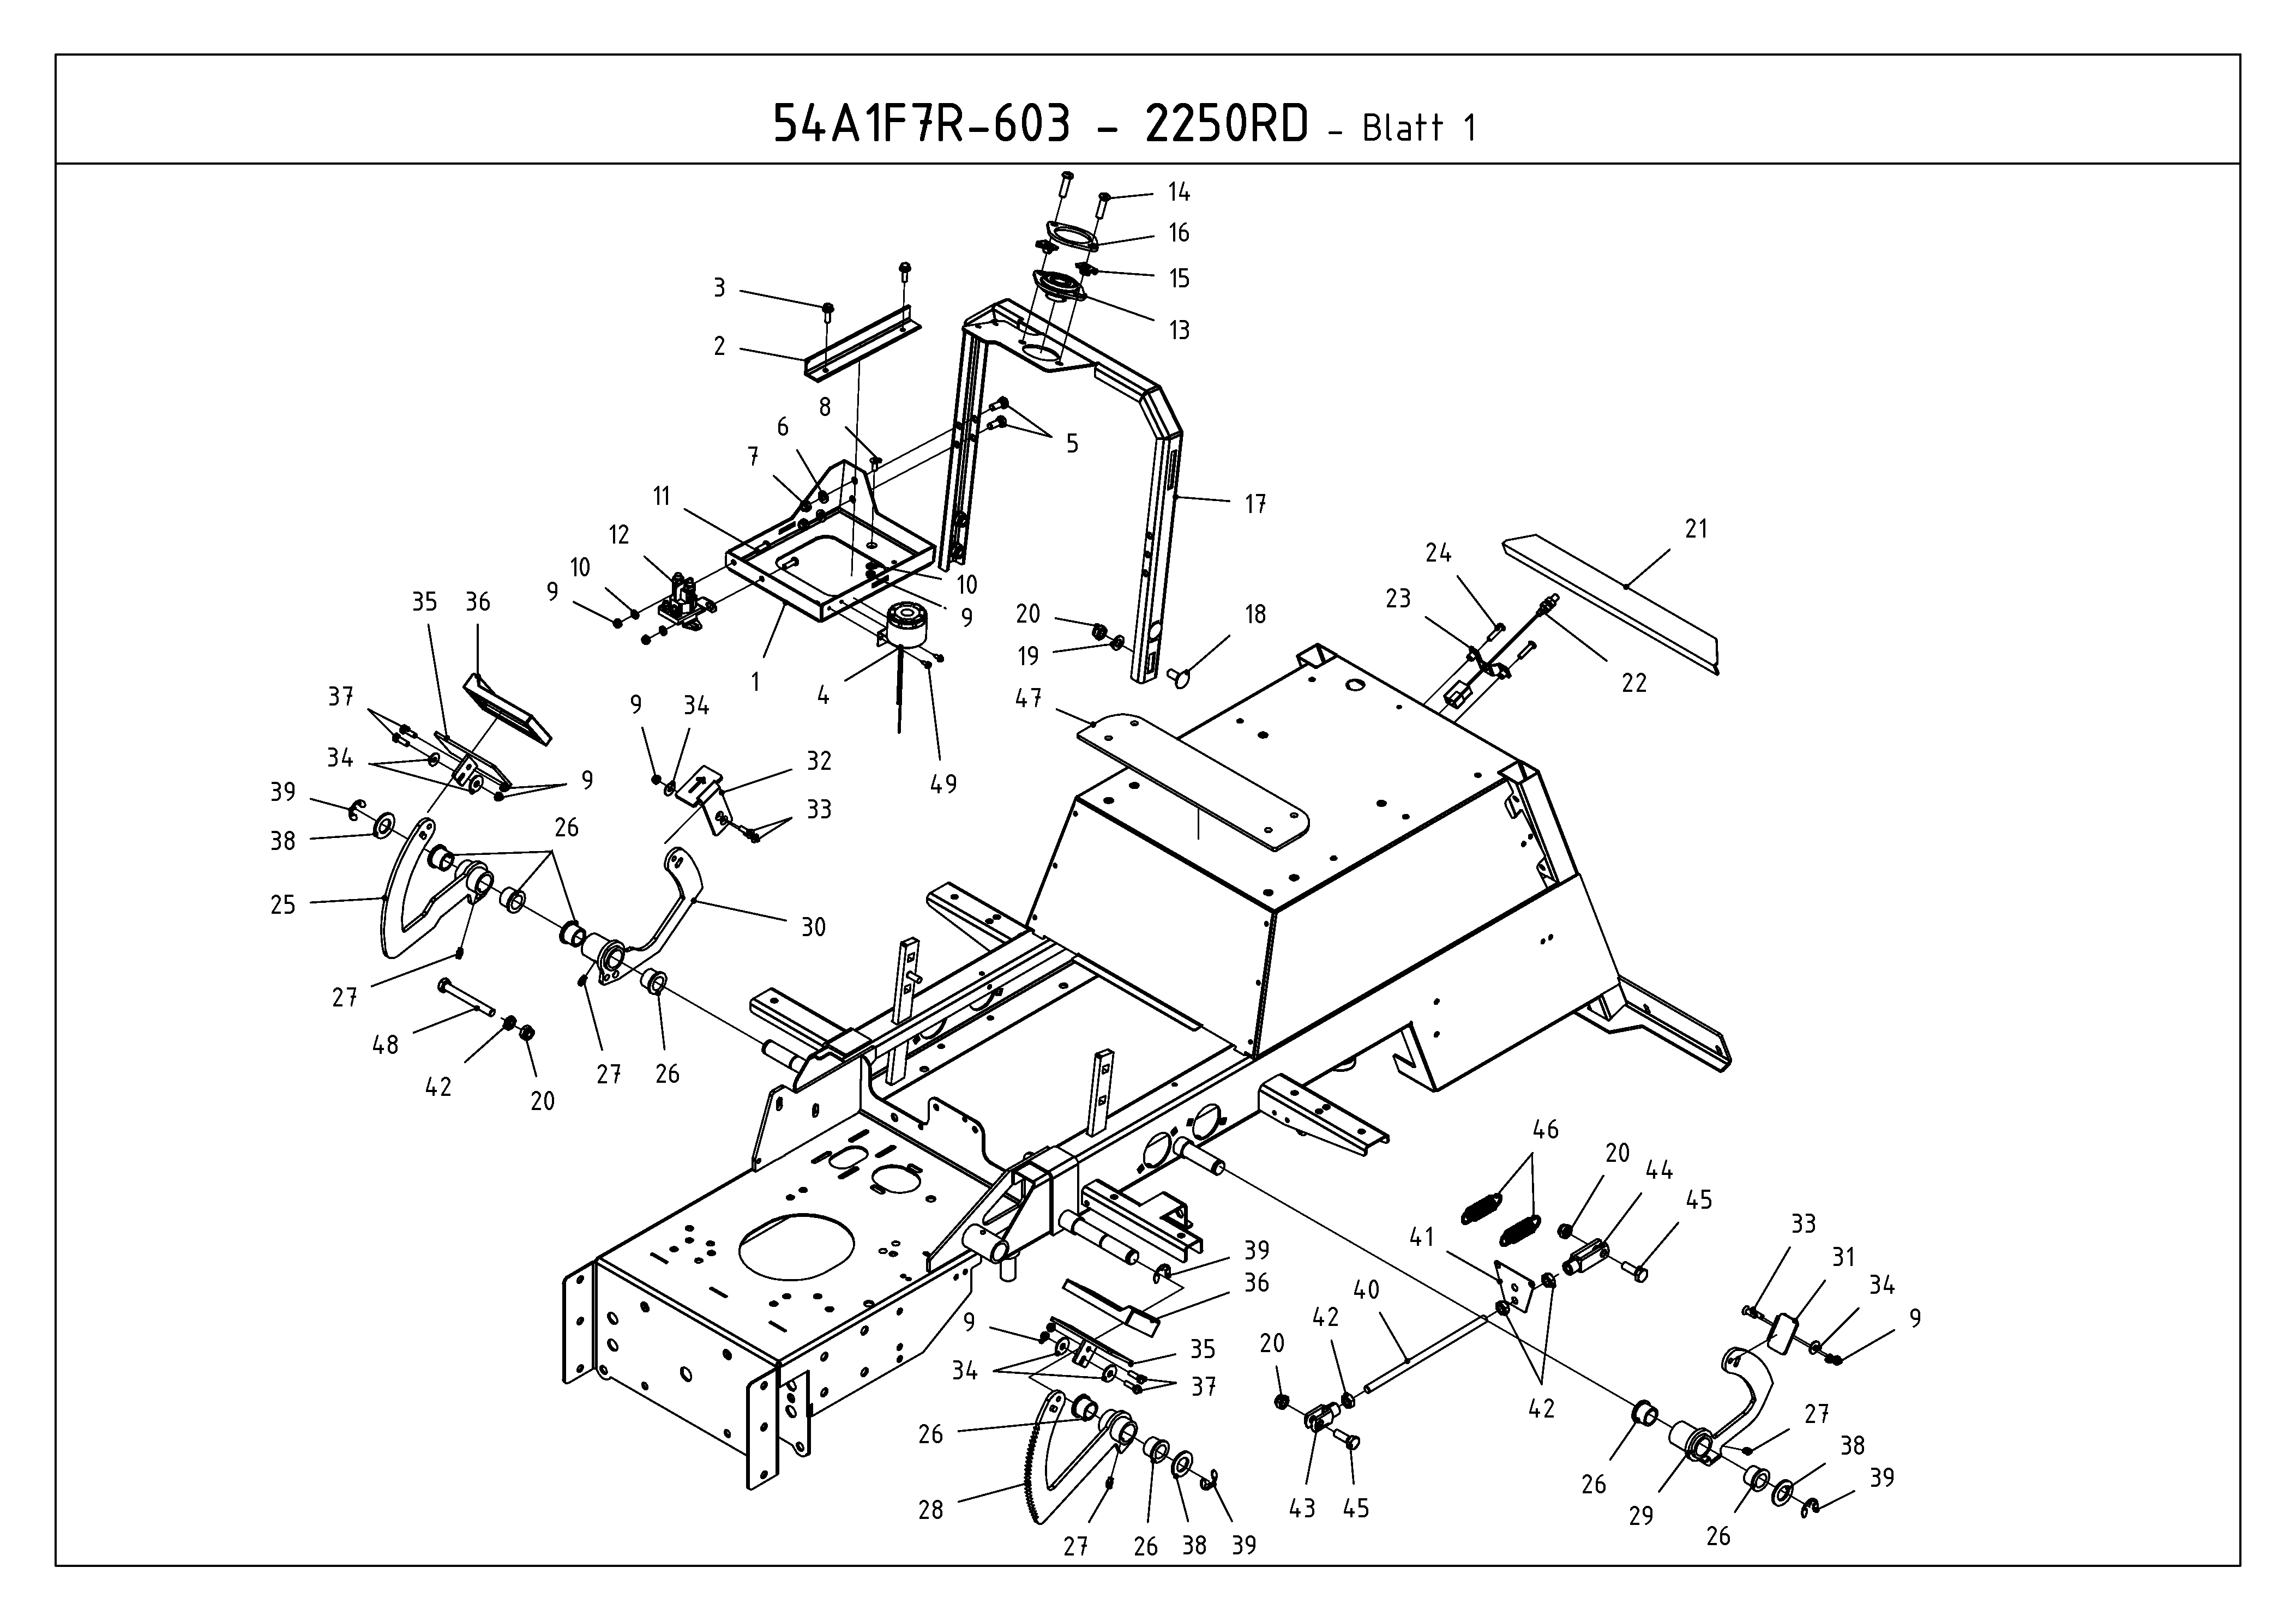 Cub Cadet, Kompakttraktoren, CC 2250 RD, 54A1F7R-603 (2009), Pedale, MTD Ersatzteil-Zeichnungen